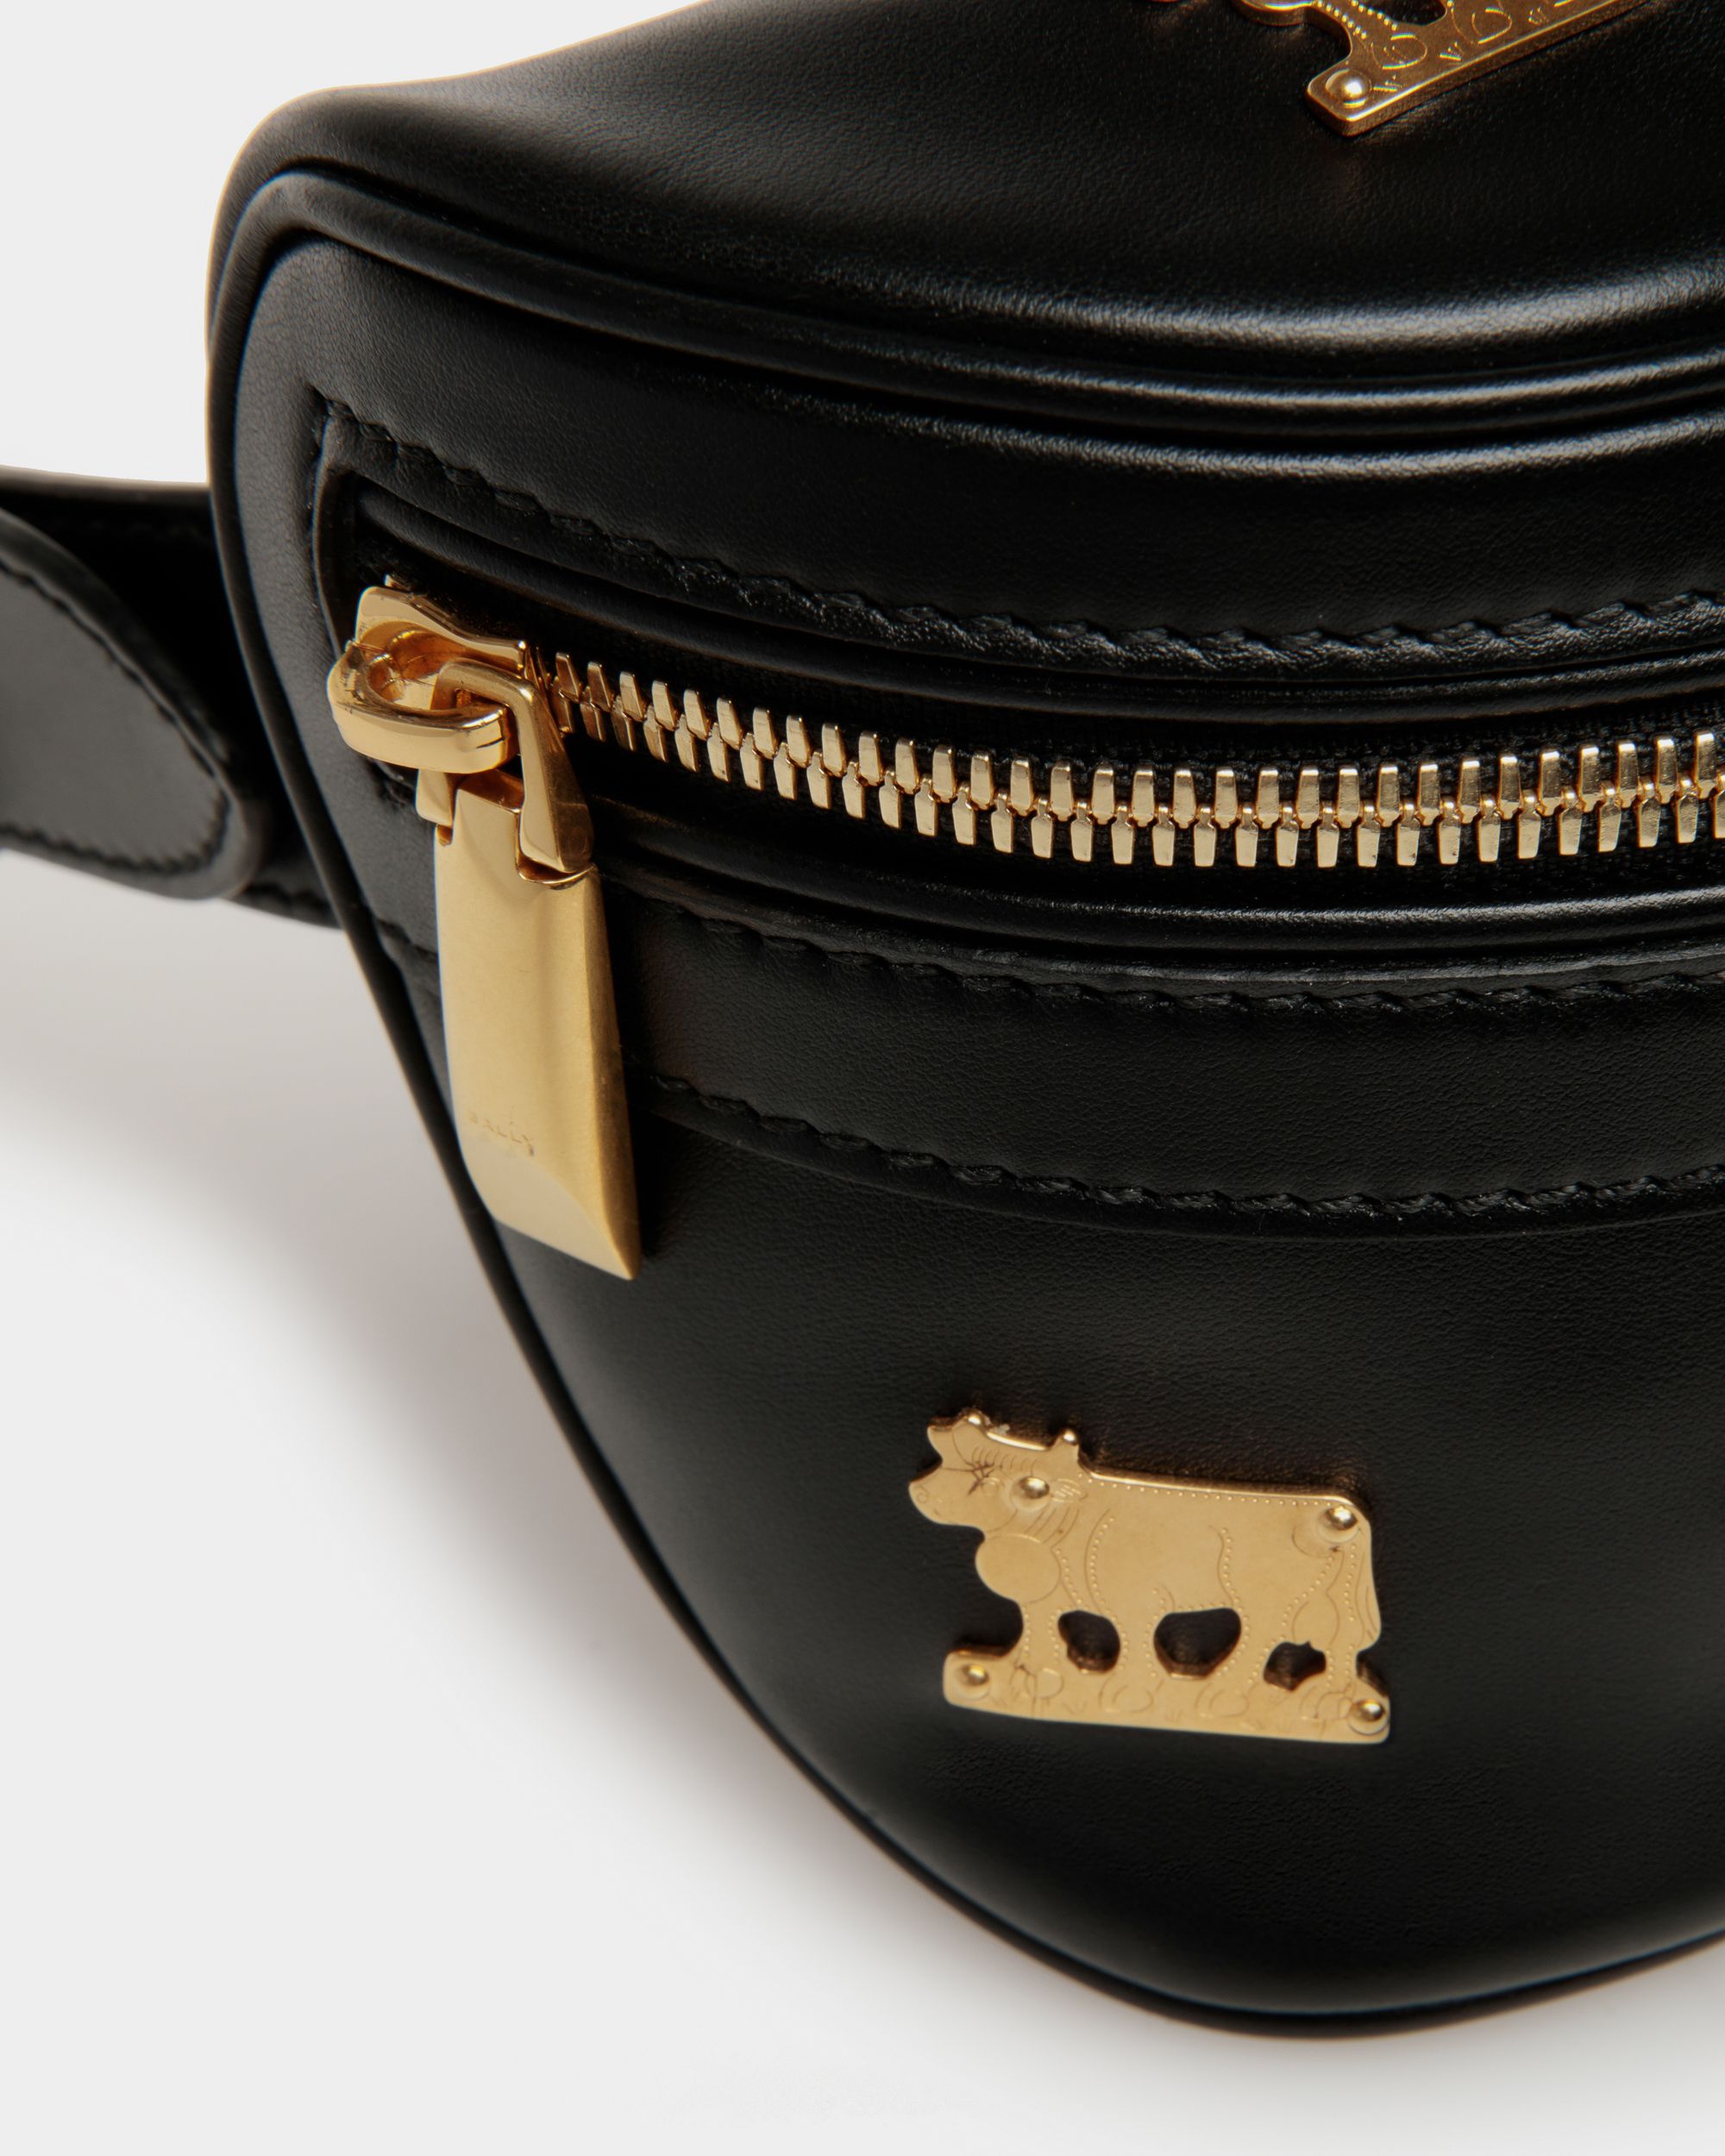 Moutain | Women's Belt Bag  in Black Leather | Bally | Still Life Detail